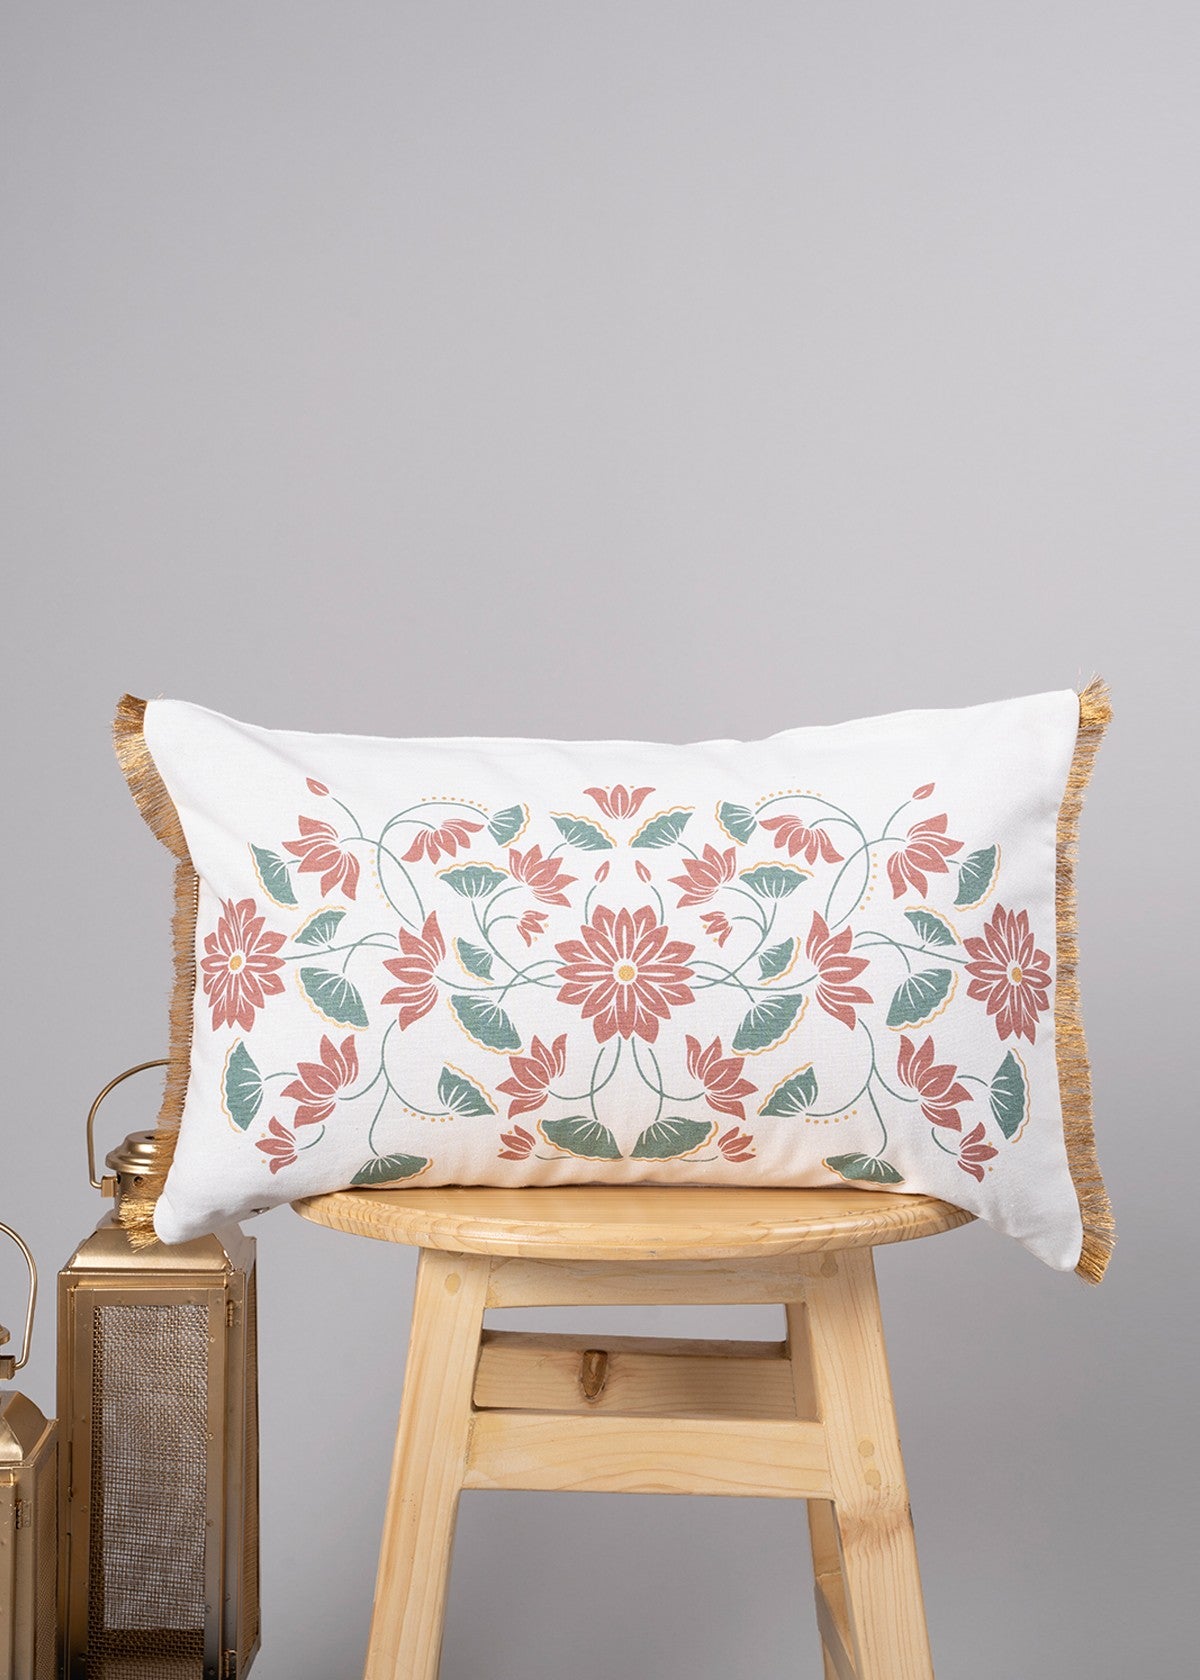 Lotus Blossom Printed Cotton Cushion Cover - Multicolor